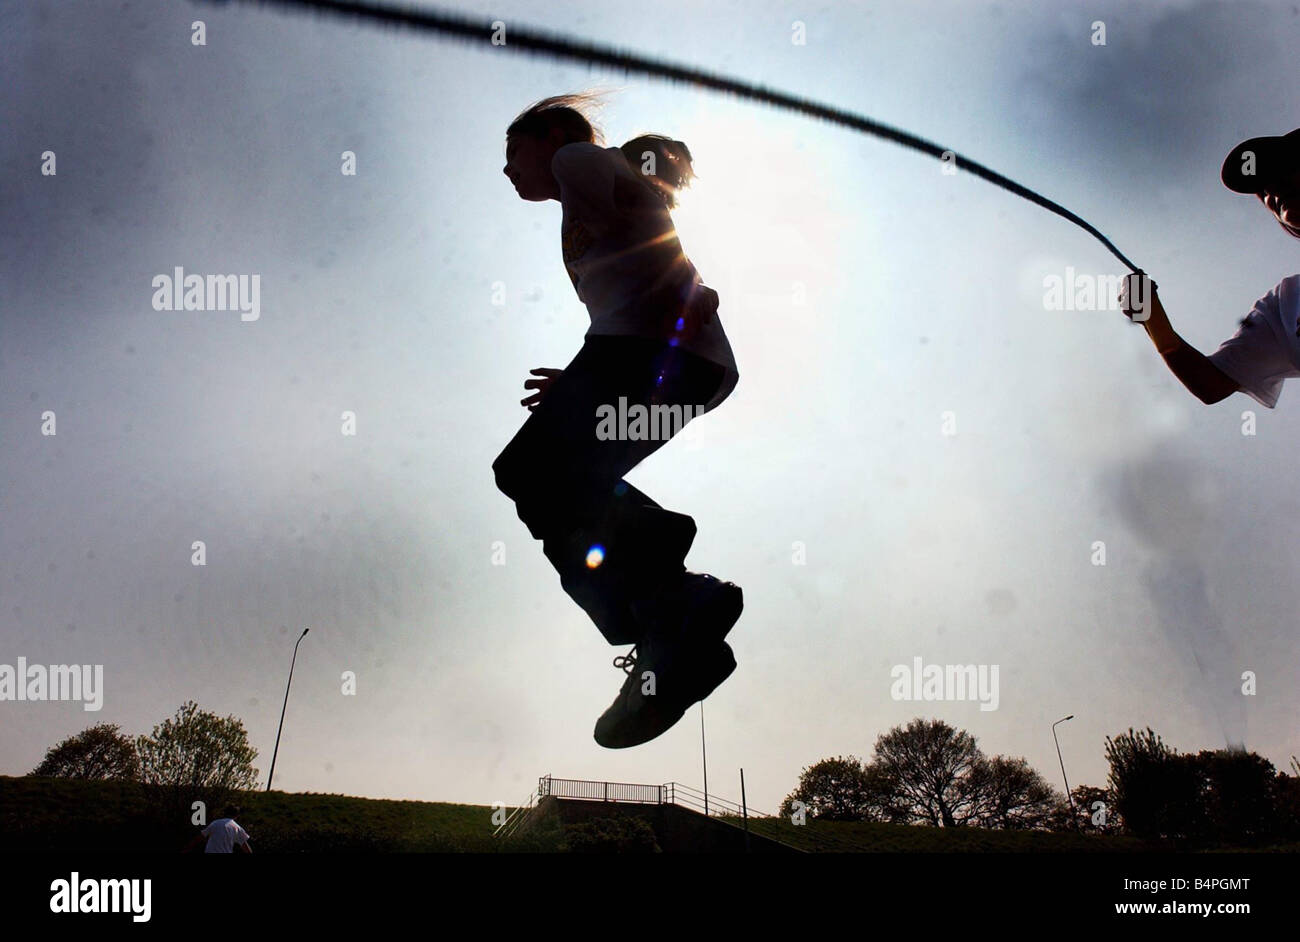 Jumping rope games Imágenes recortadas de stock - Alamy